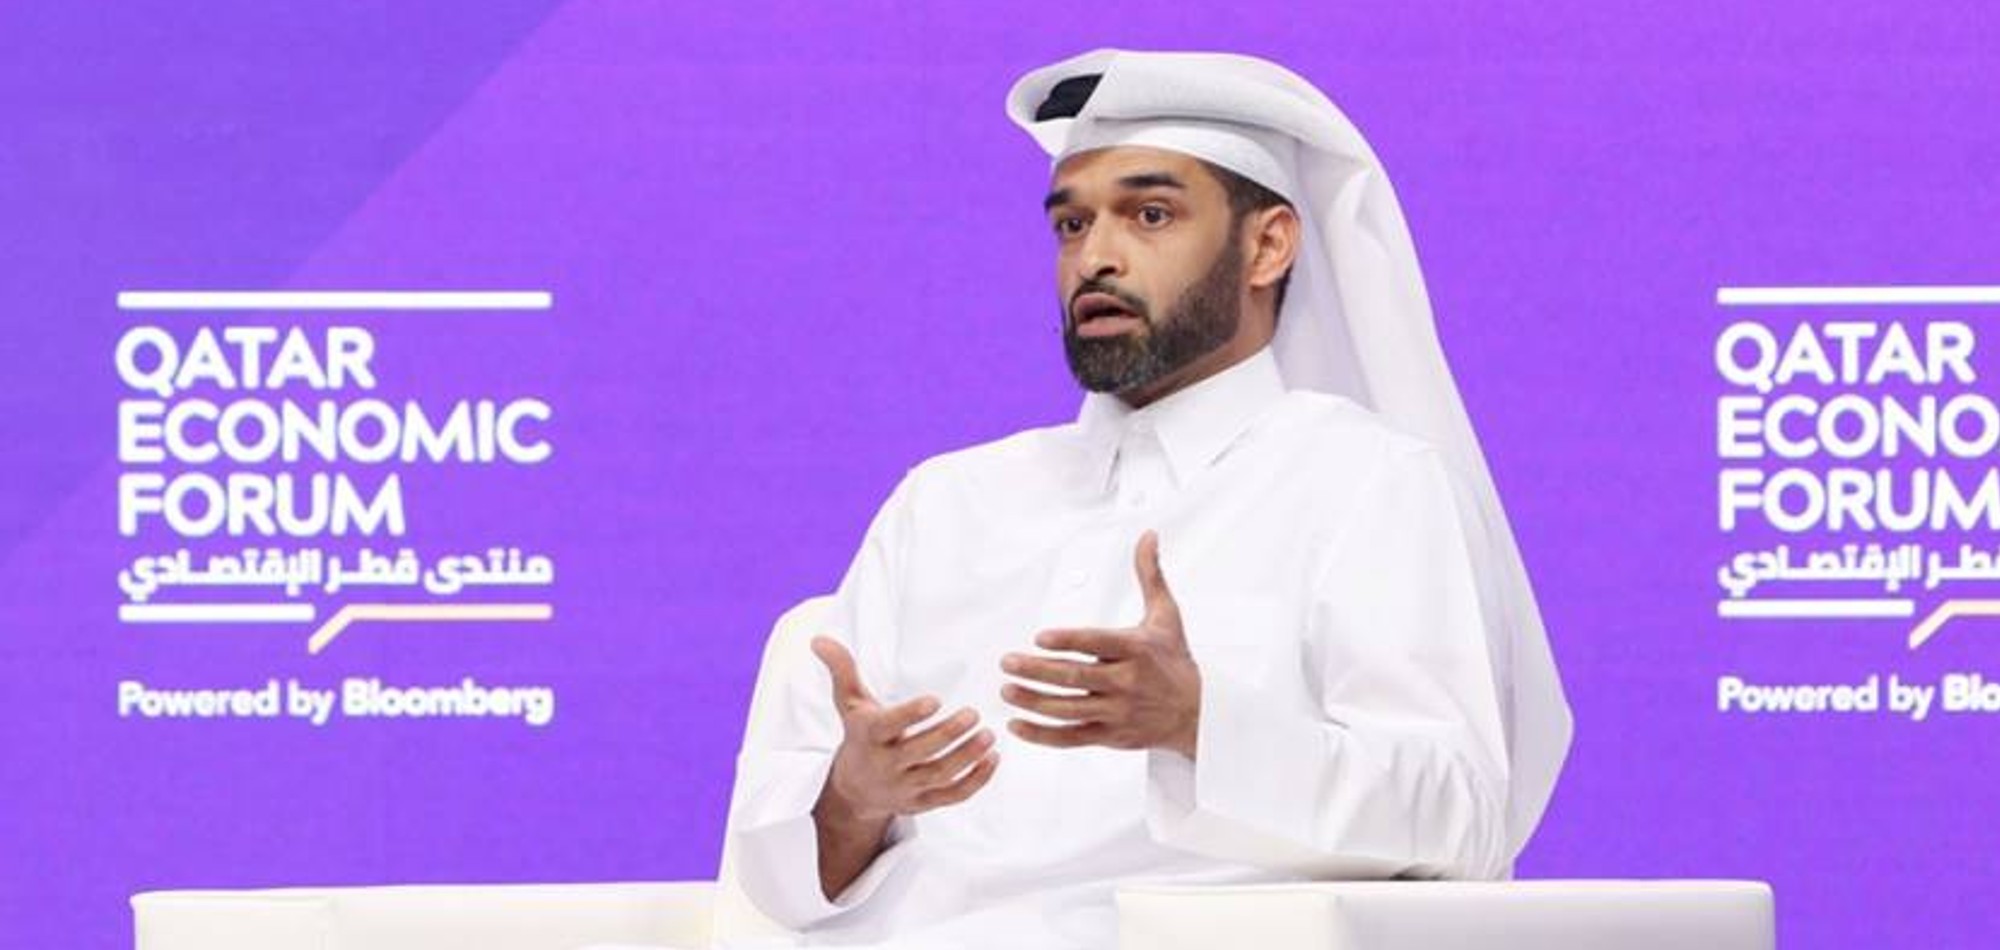 FIFA World Cup Qatar 2022 Infrastructure is Ready, says Al Thawadi